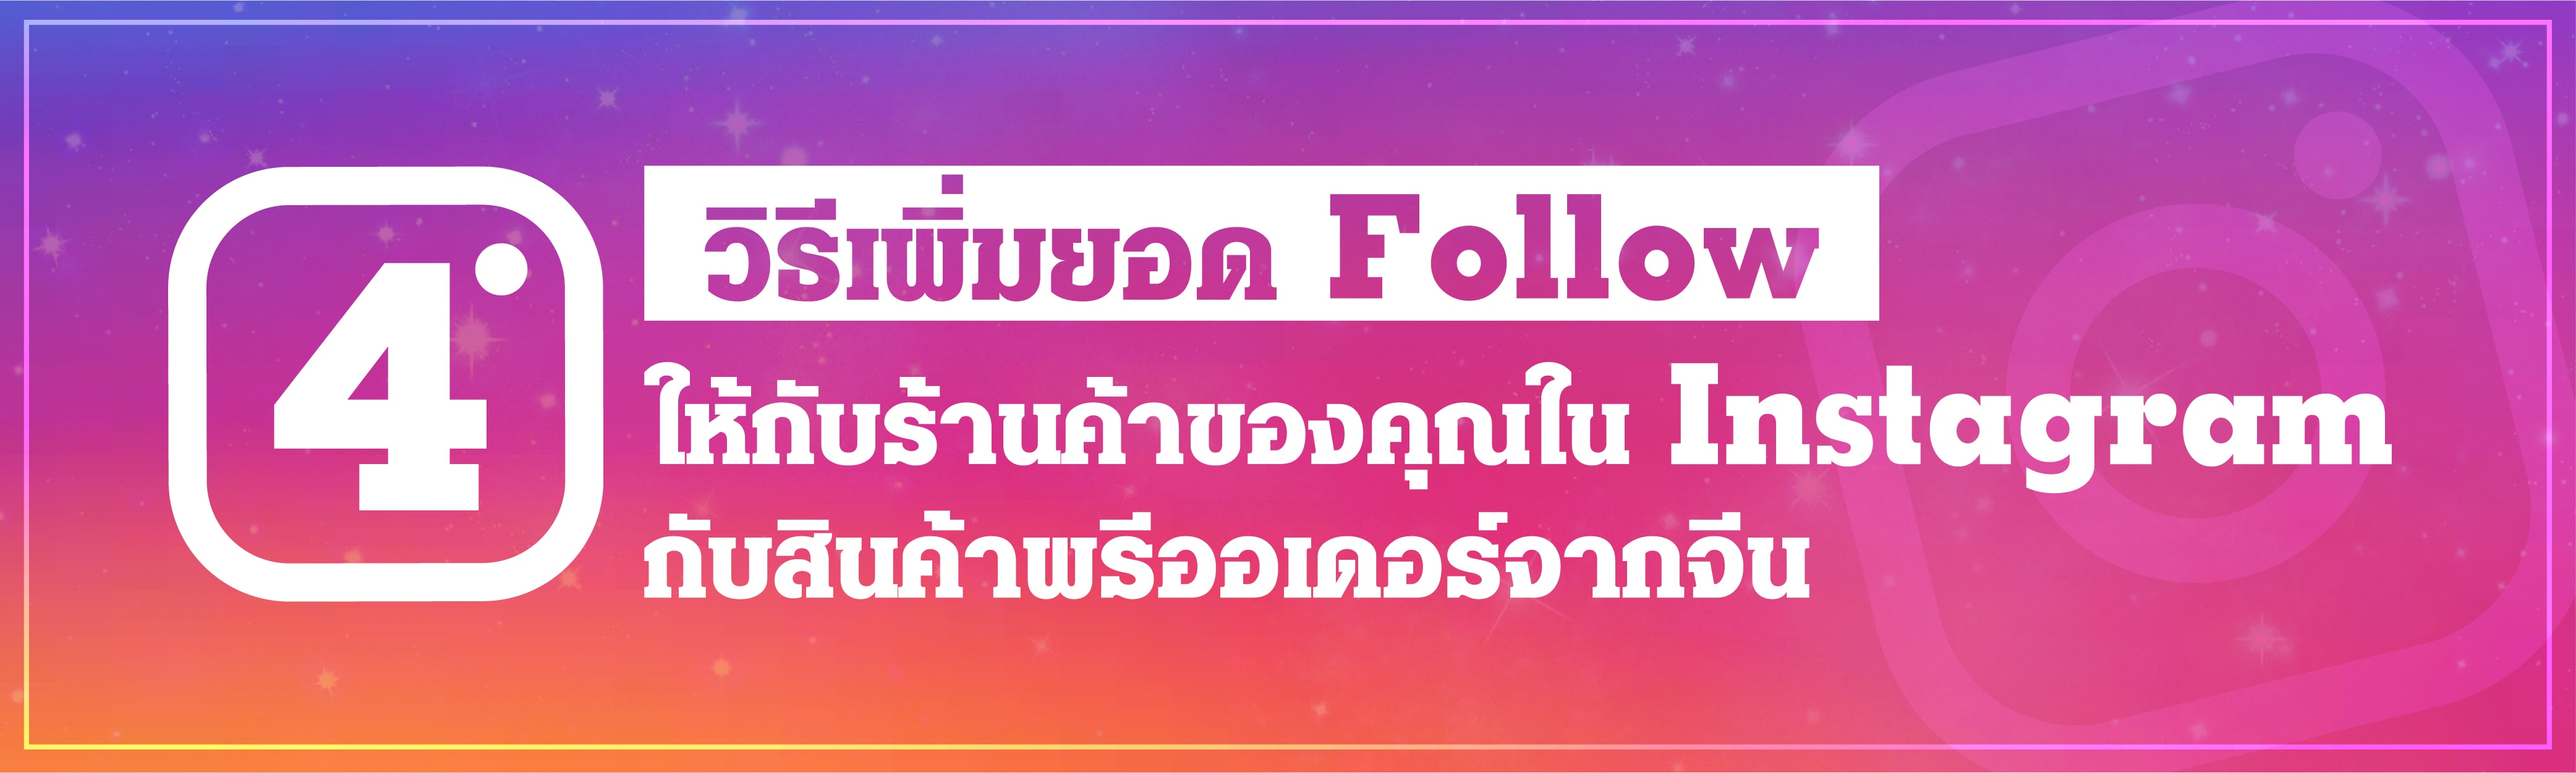 zพรีออเดอร์จีน  4 วิธีเพิ่มยอด Follow ให้กับร้านค้าของคุณใน Instagram !! กับสินค้าพรีออเดอร์จากจีน 4FolloewIG 01 min